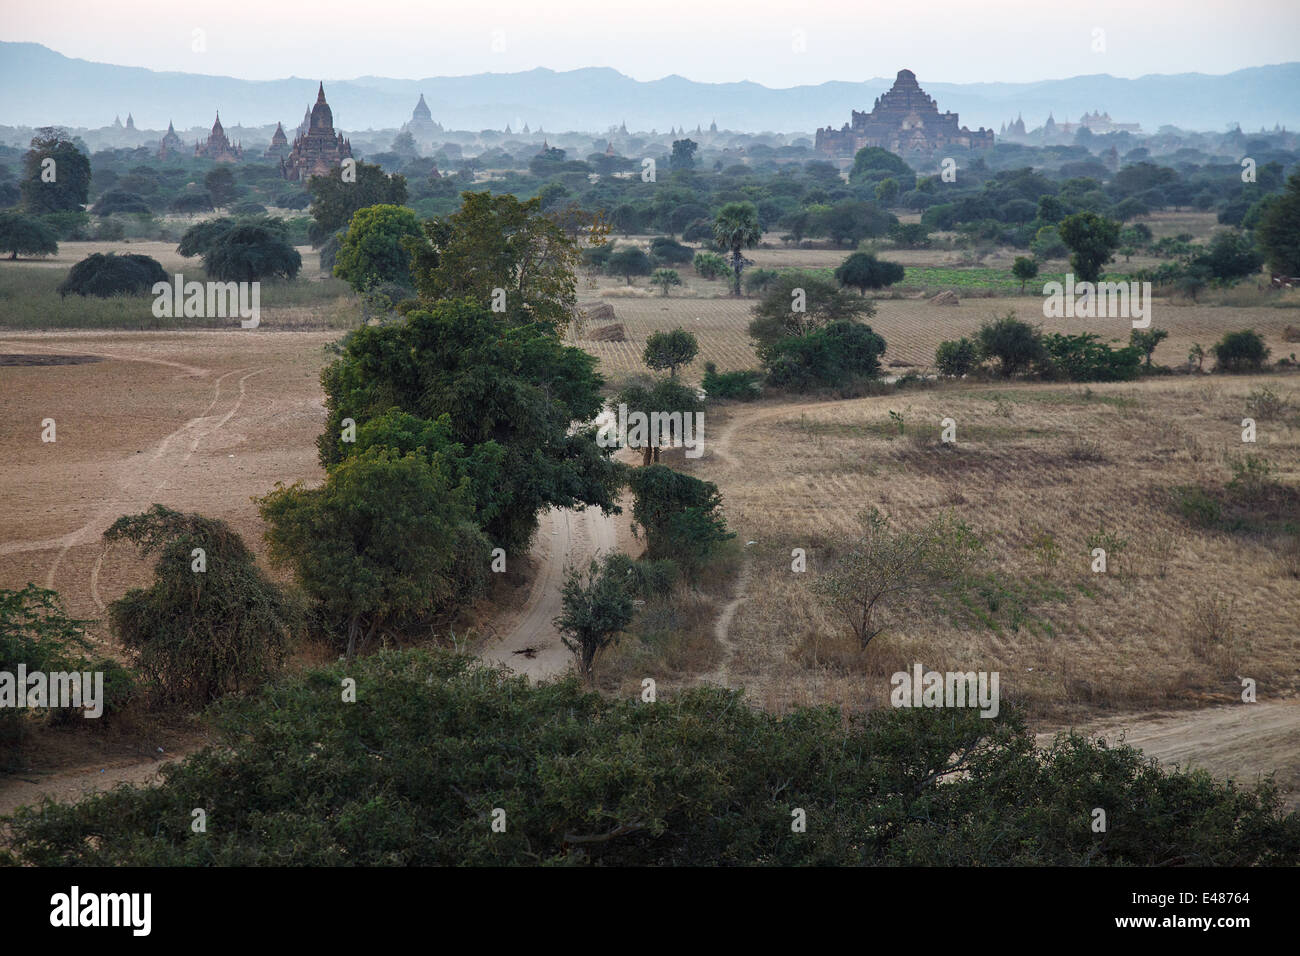 A view at the temples at Bagan, Myanmar (Burma) Stock Photo